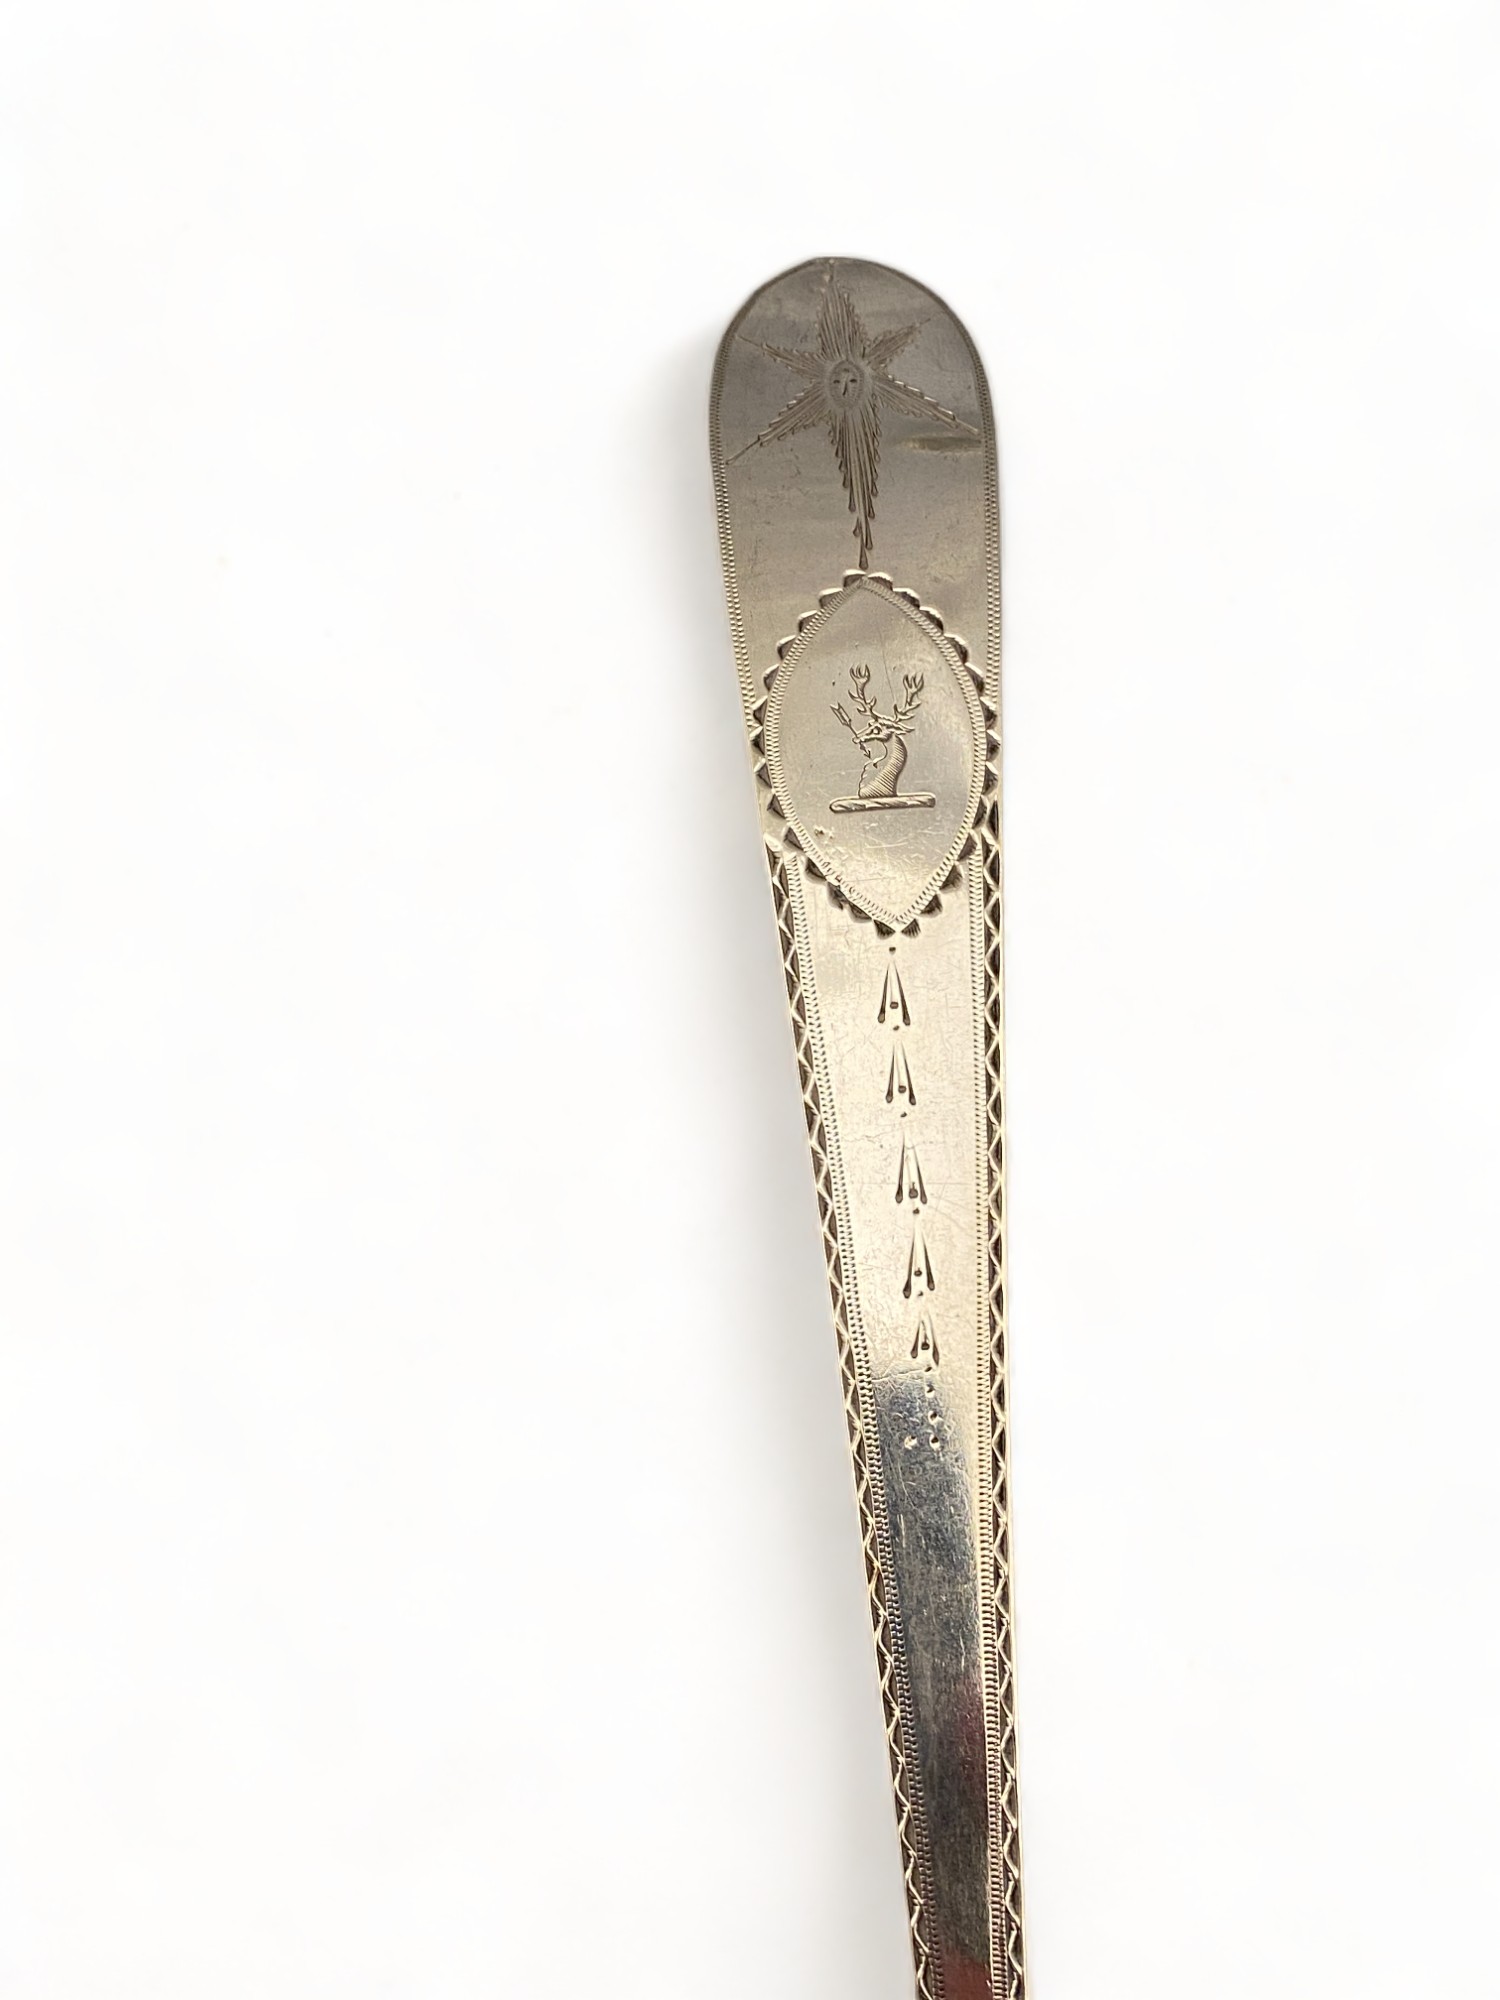 A fine George III century Irish silver divided straining spoon, James Bradie, Dublin, 1797 - Image 3 of 7